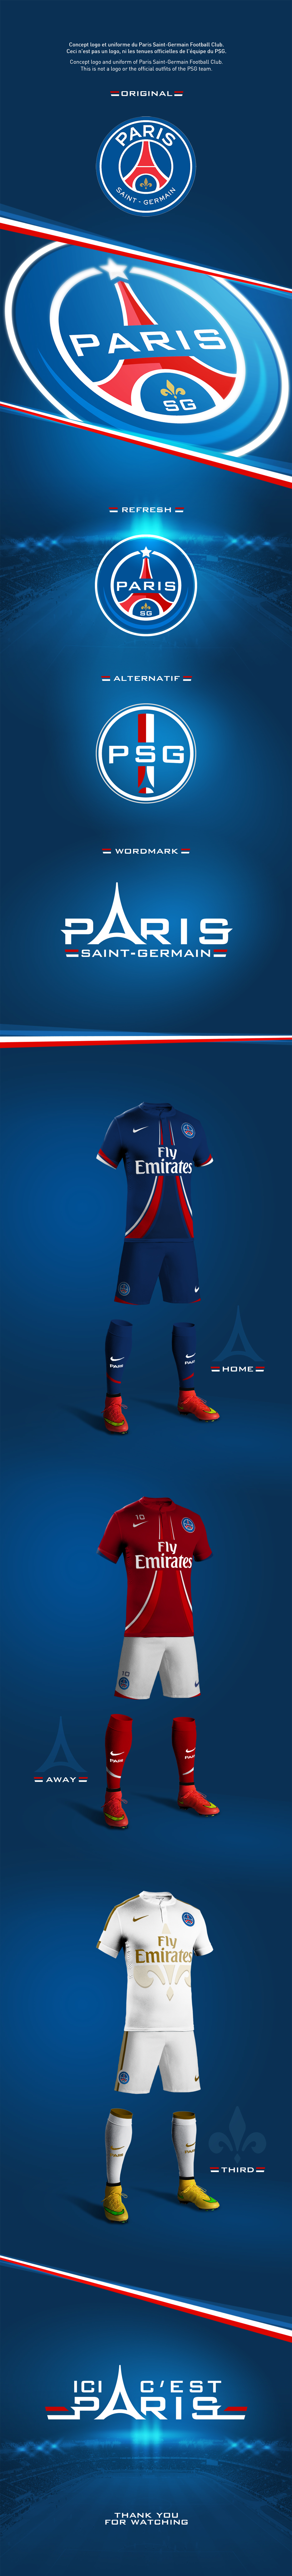 rebrand logo logo PSG football soccer design logo concept design christophe lizet tezil Ligue 1 sport sport outfits maillots Paris Saint-Germain